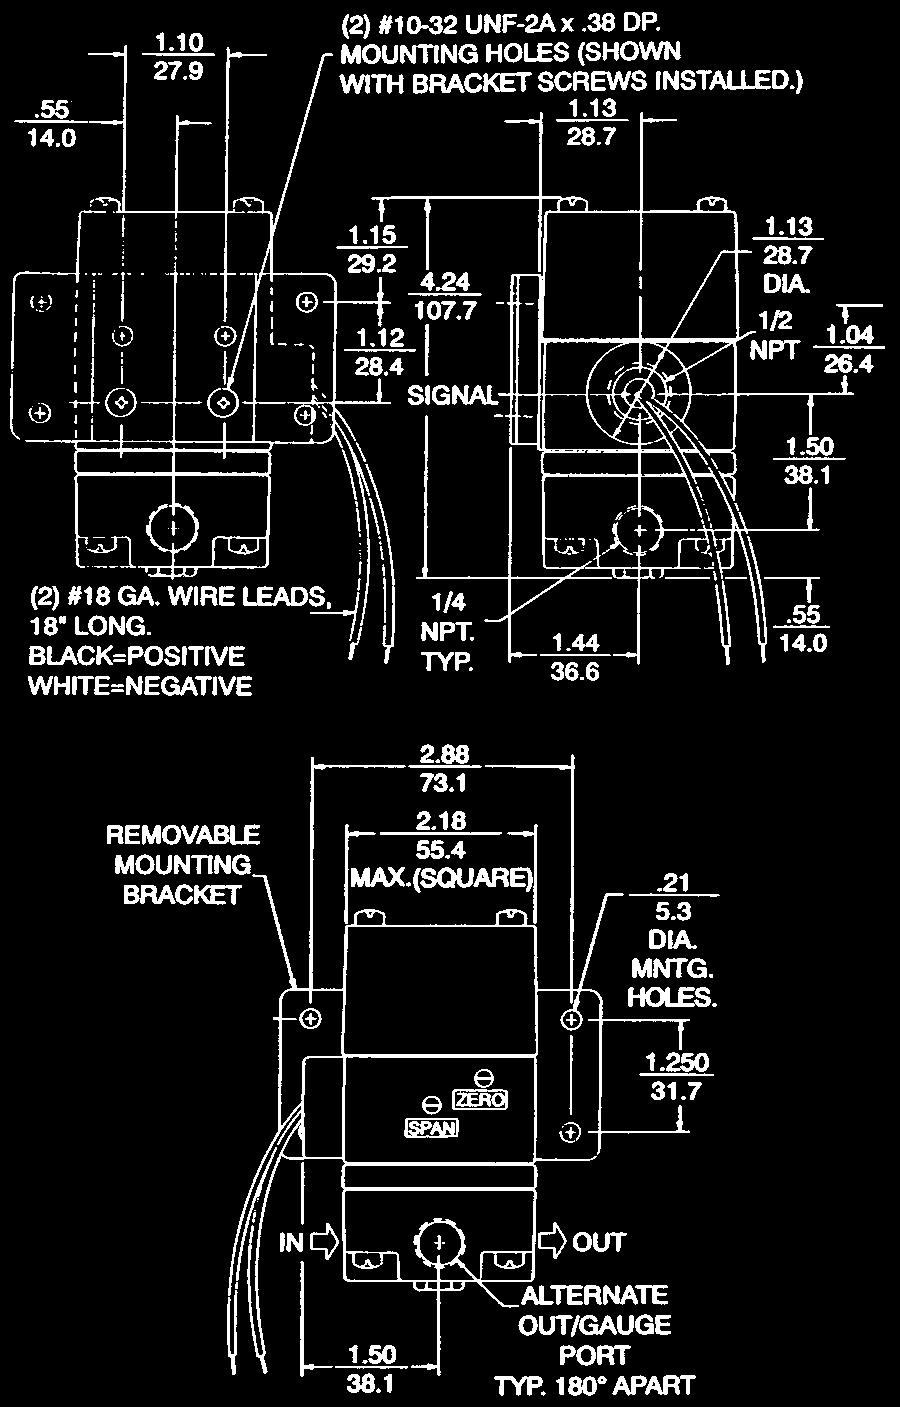 How To Order R 83 1 02 F G Model R = Regulator Series 83 = I/P, E/P Transducer Style 1 = 4-20 Ma 2 = 0-5 VDC